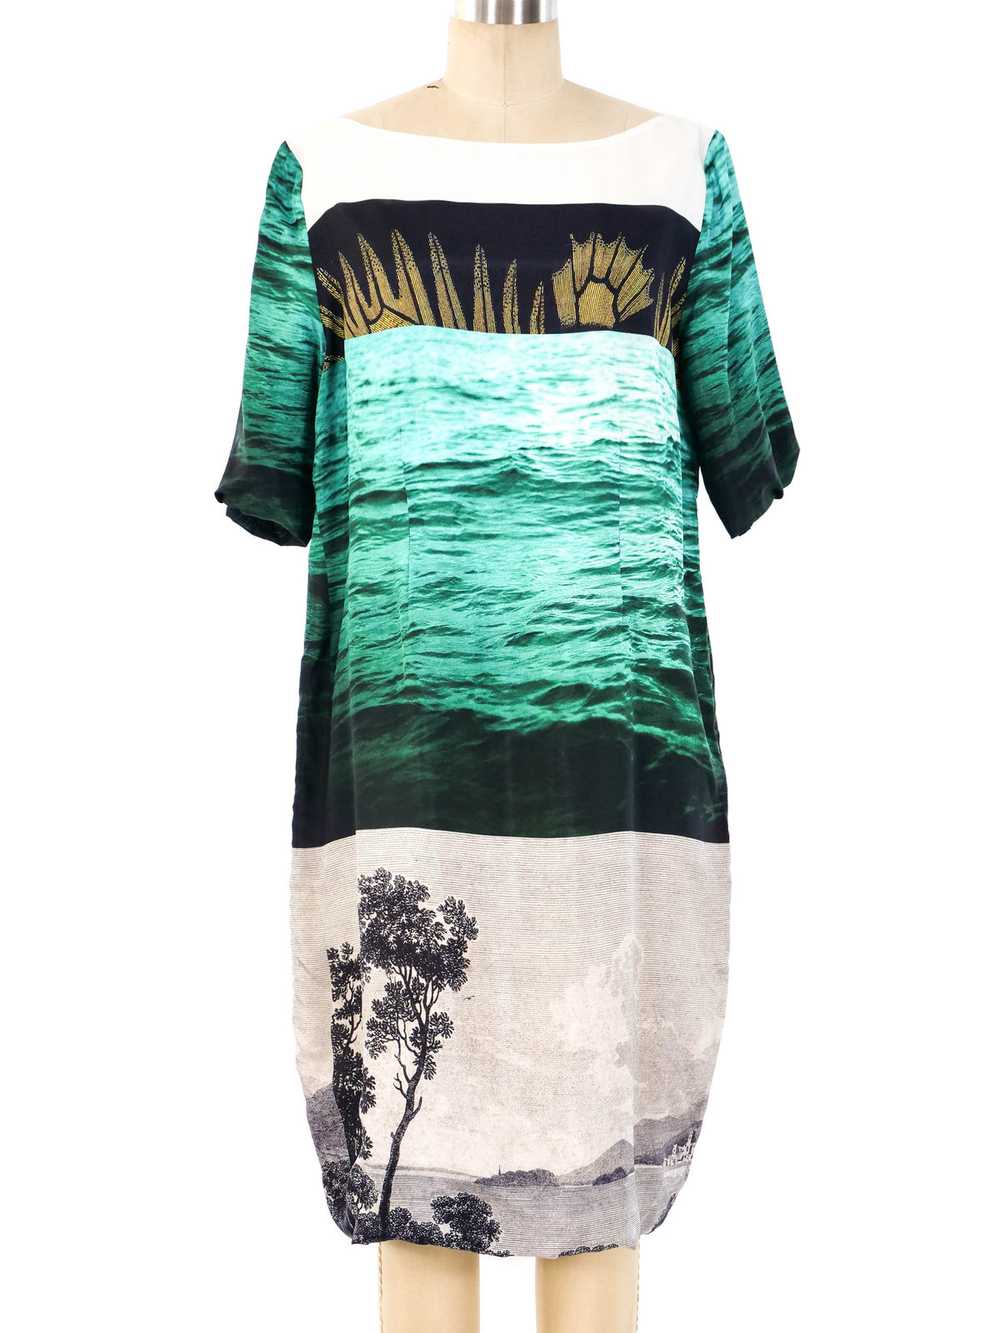 Dries Van Noten Water Motif Printed Shift Dress - image 1